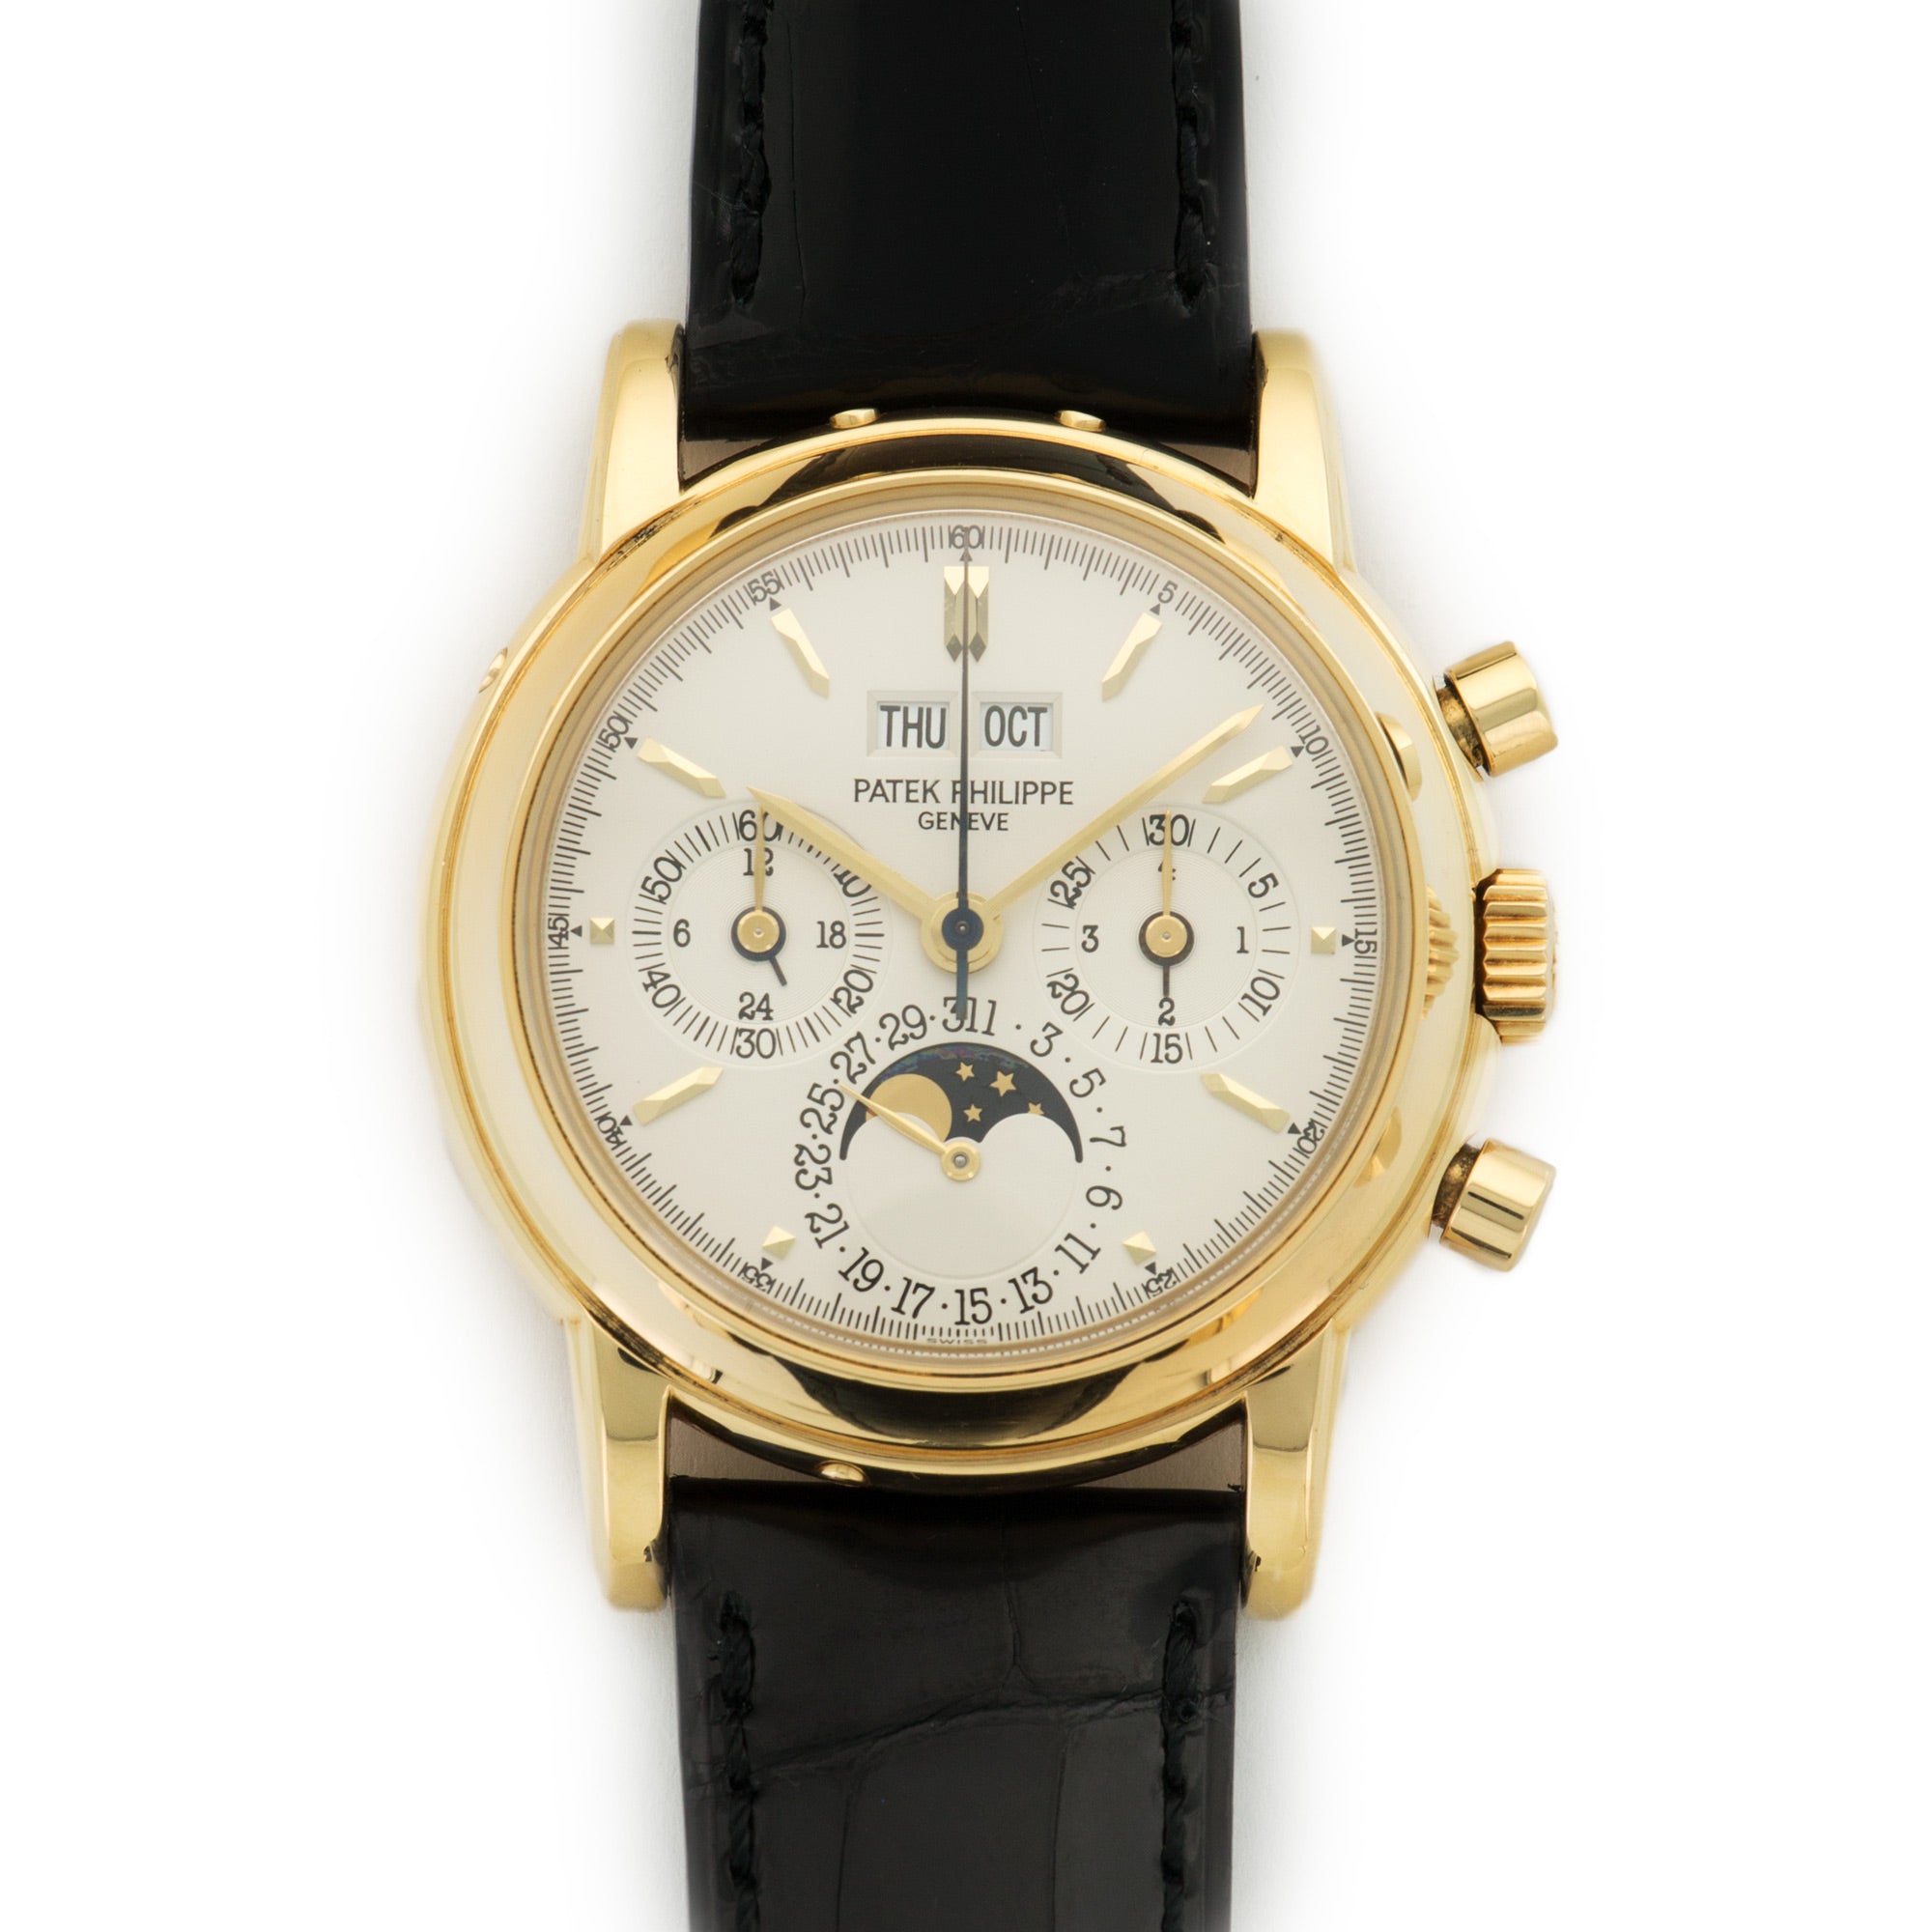 Patek Philippe - Patek Philippe Yellow Gold Perpetual Calendar Chrono Watch Ref. 3970 - The Keystone Watches